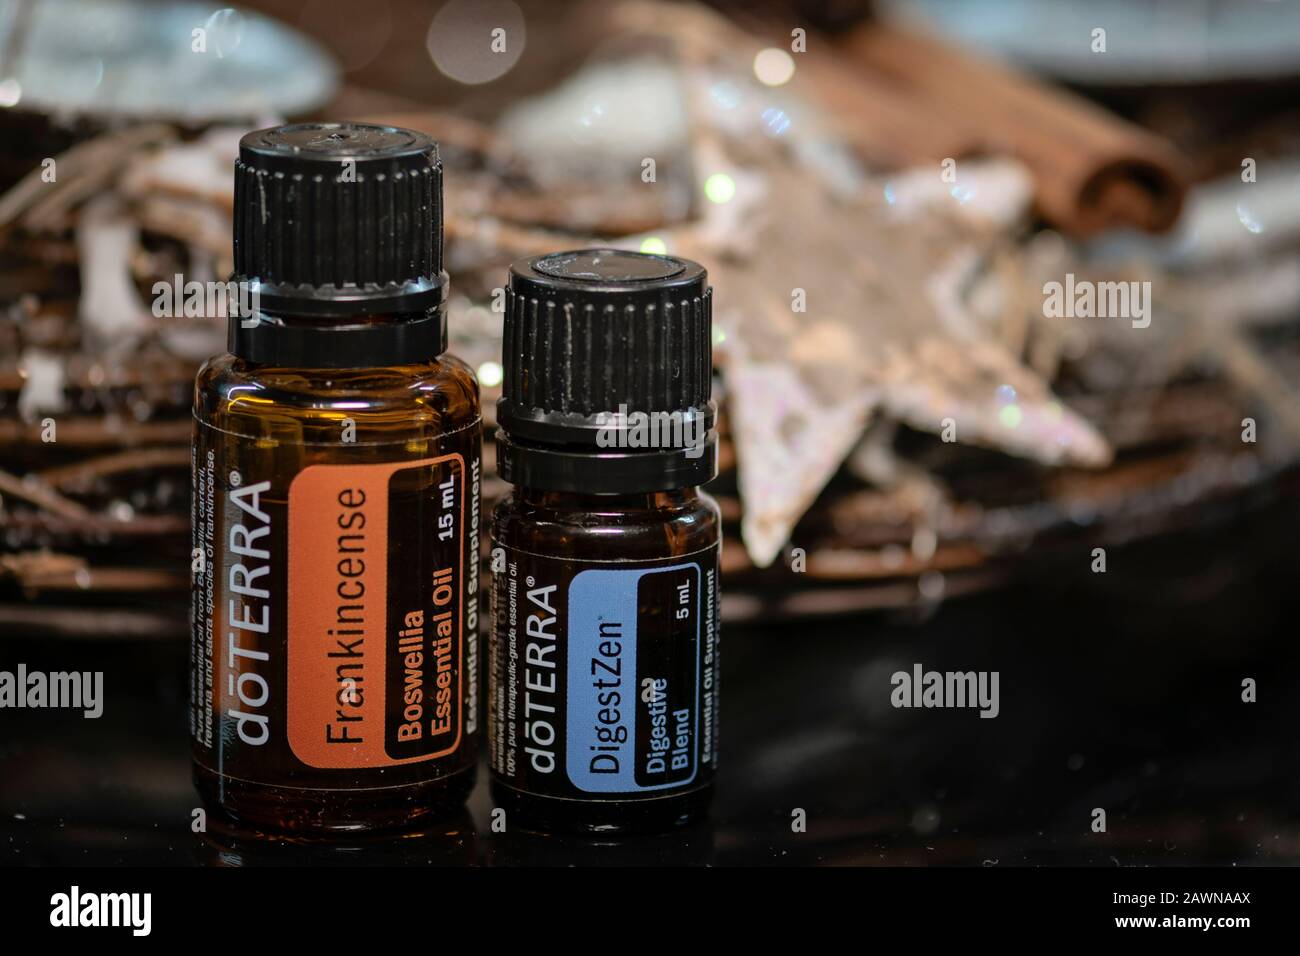 Banska Bystrica, Slovakia - December 8th 2019: High quality essential aromatherapy oils Doterra brand. Frankincense and DigestZen essential oil. Stock Photo